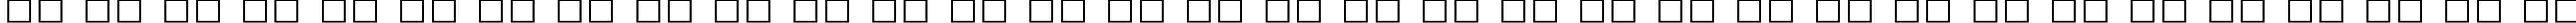 Пример написания русского алфавита шрифтом MV Boli